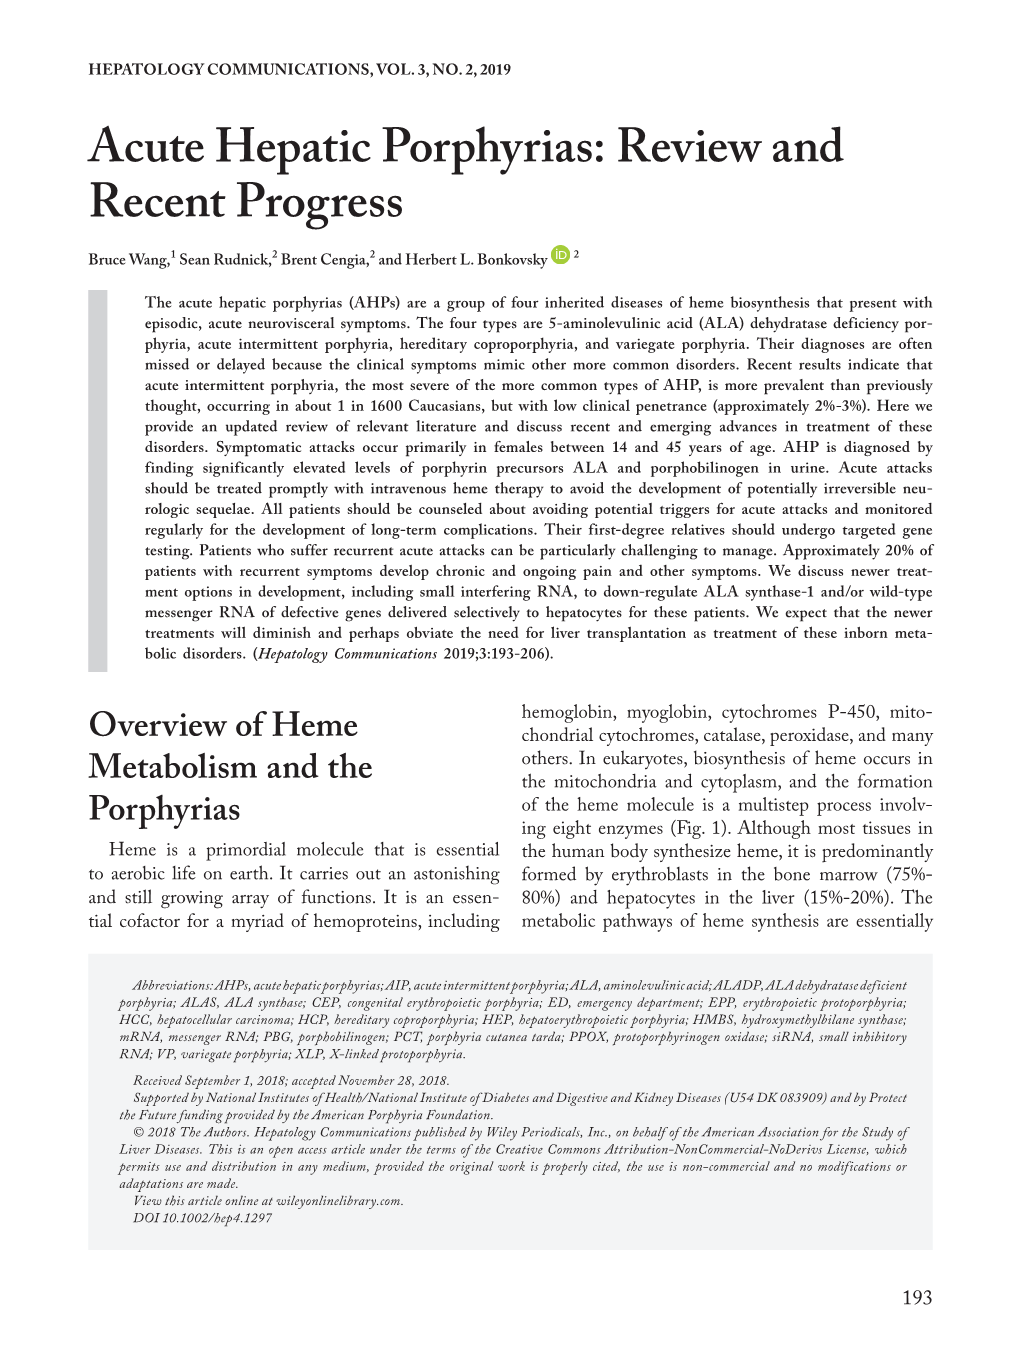 Acute Hepatic Porphyrias: Review and Recent Progress 1 2 2 2 Bruce Wang, Sean Rudnick, Brent Cengia, and Herbert L